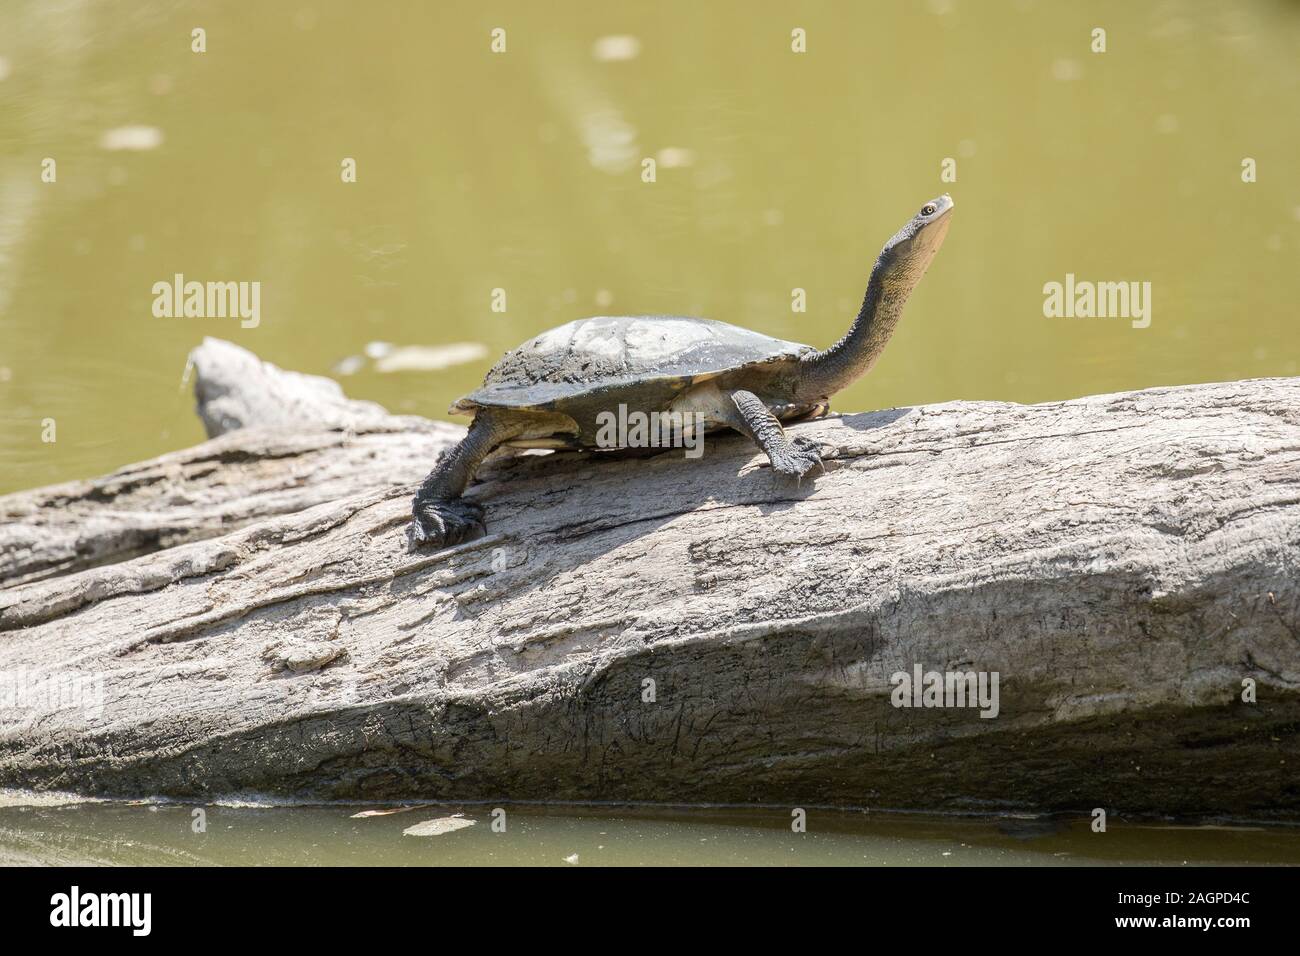 Eastrn Long-necked Turtle basking on log Stock Photo